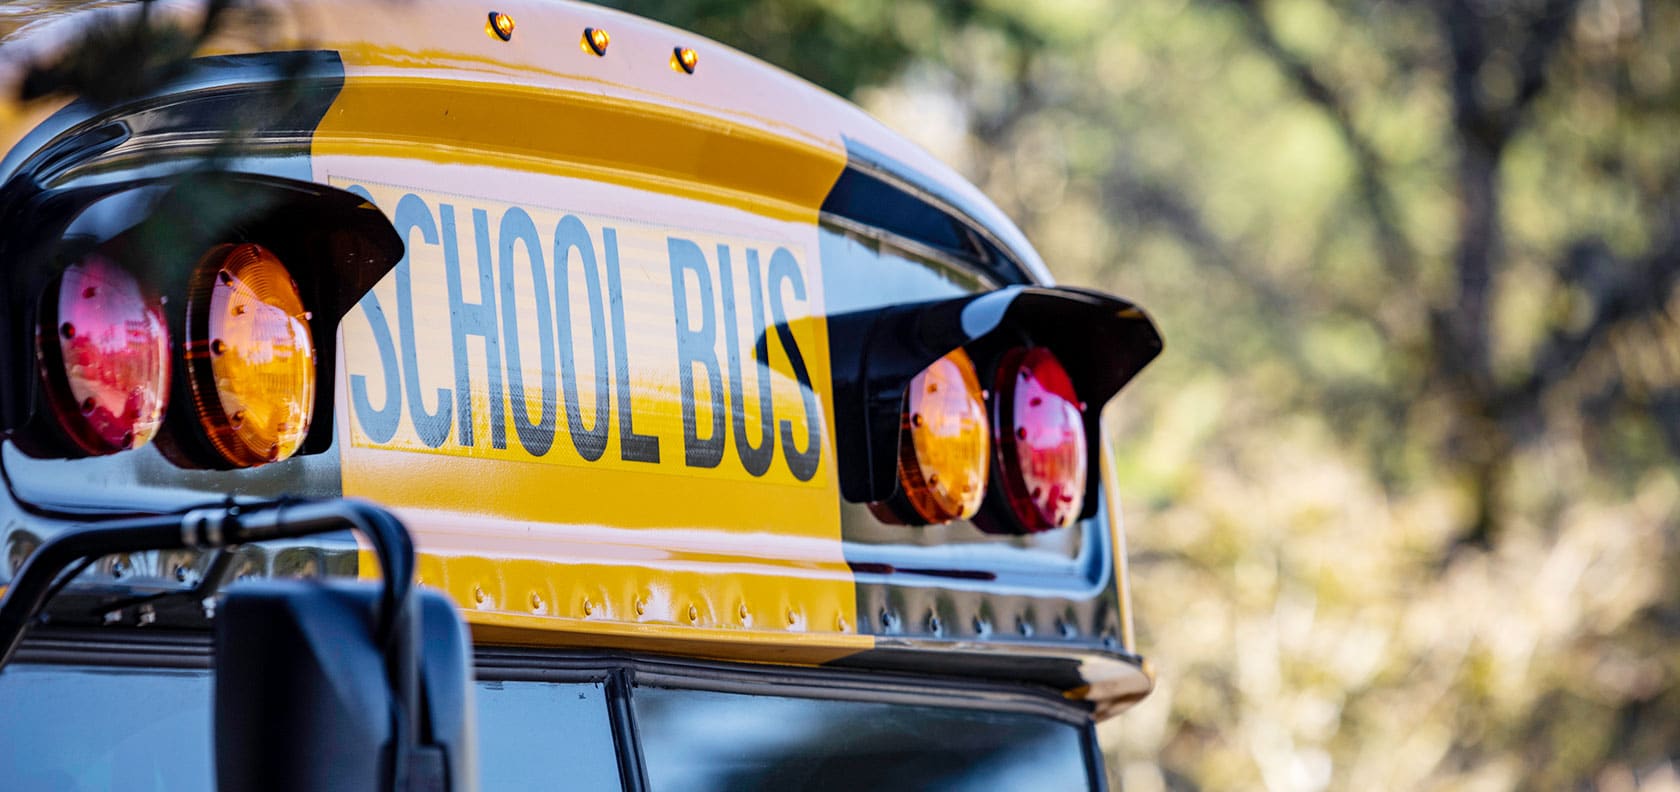 School bus to take children to school